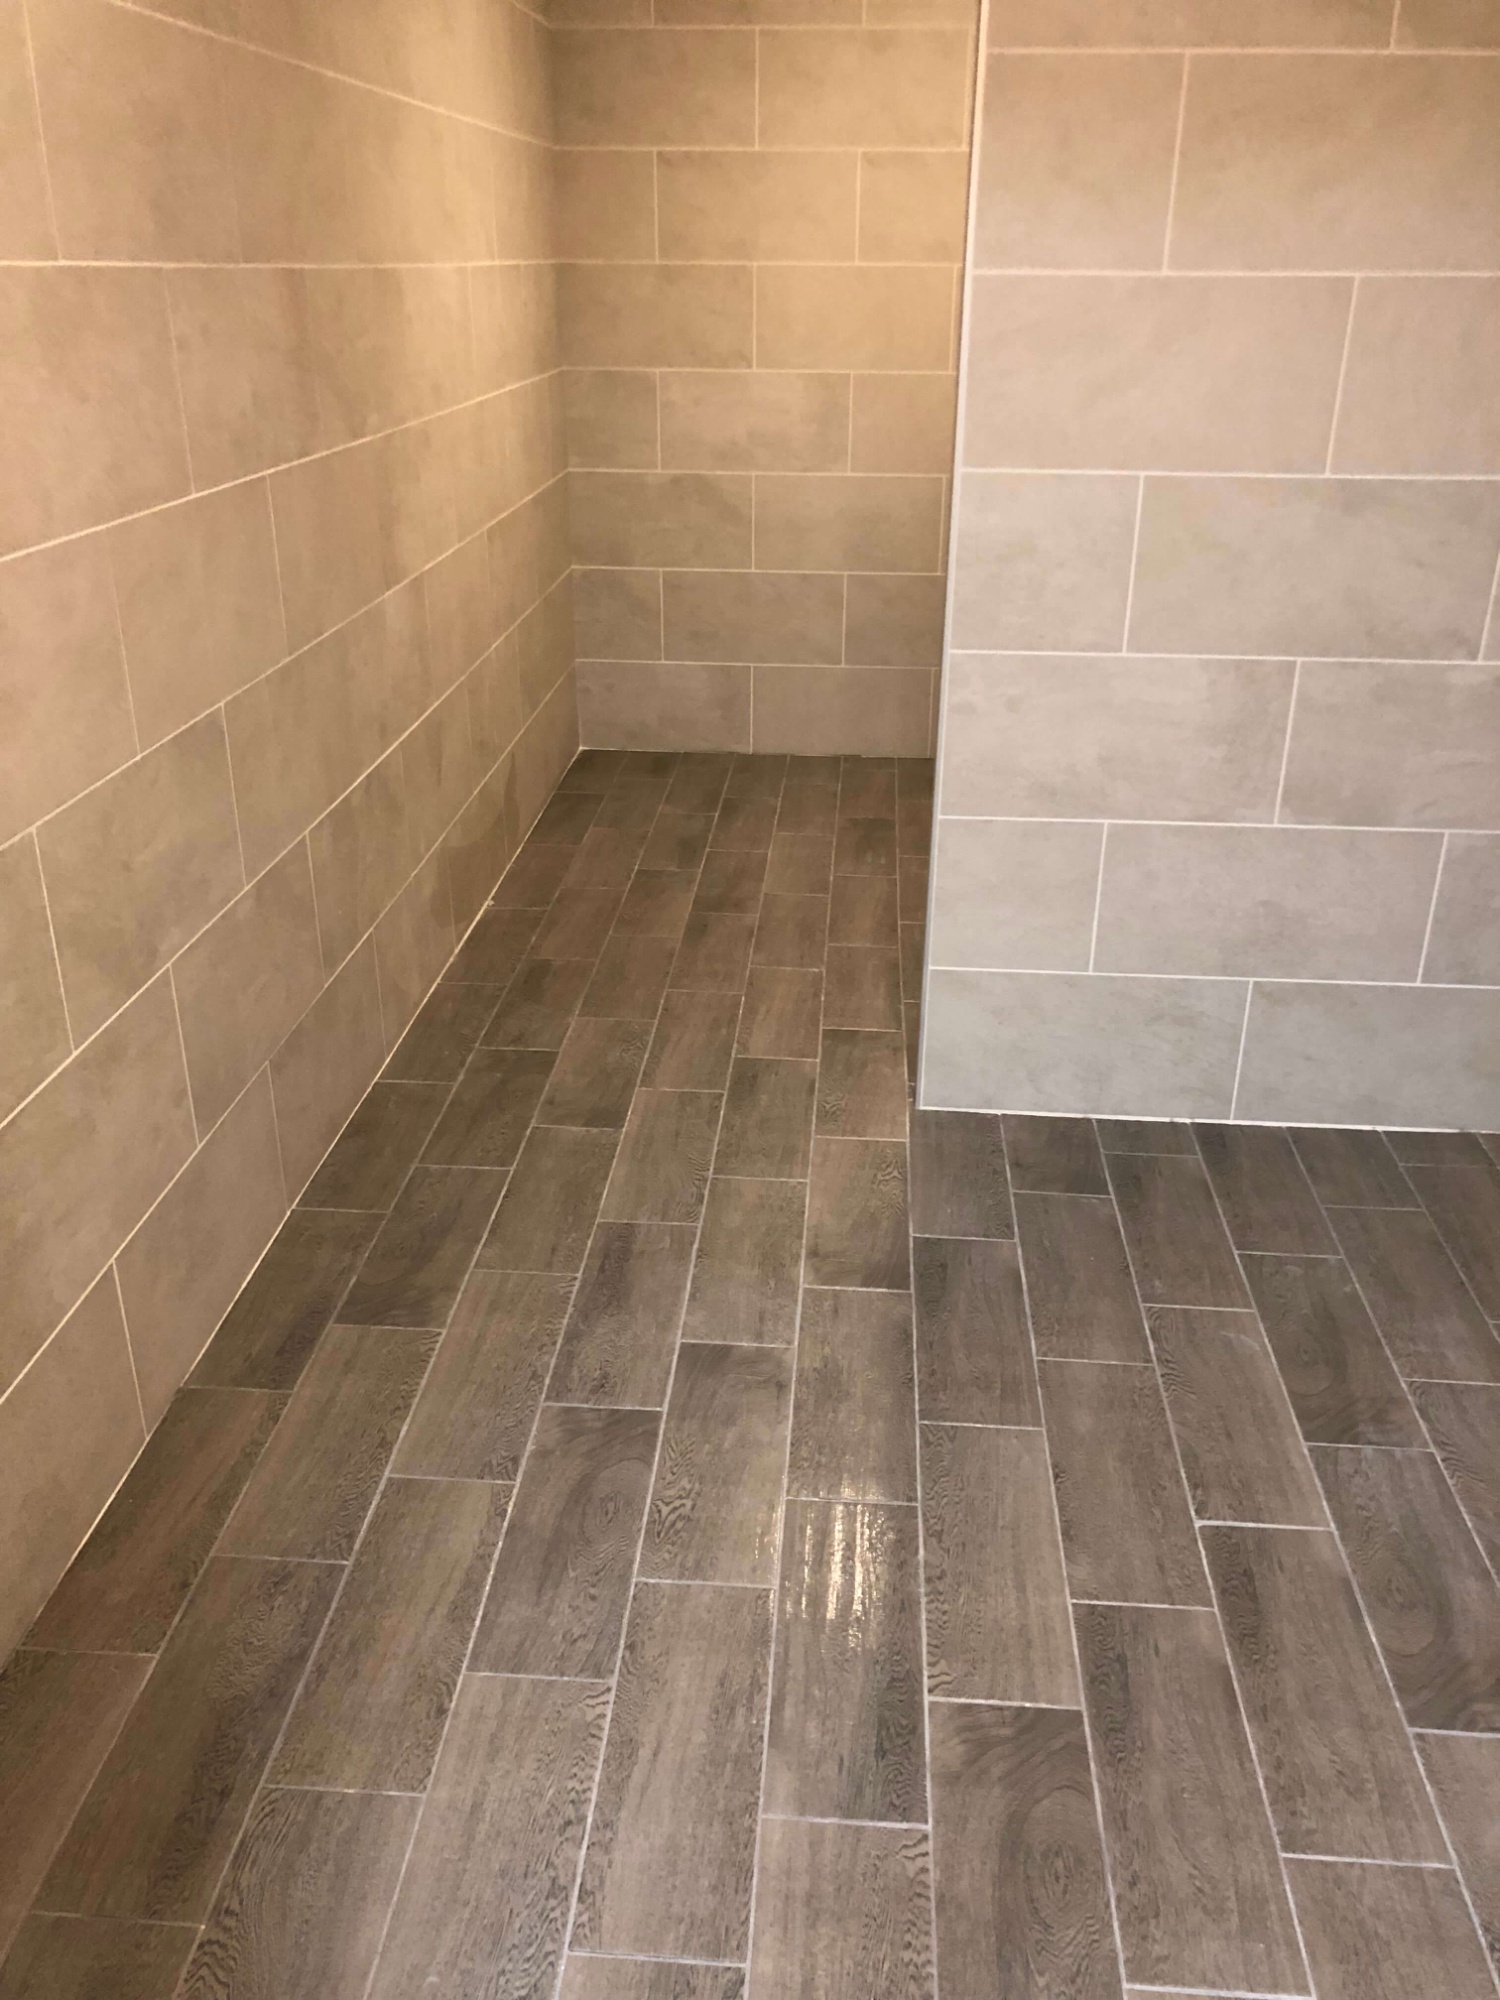 Commercial tile installers in Wisconsin